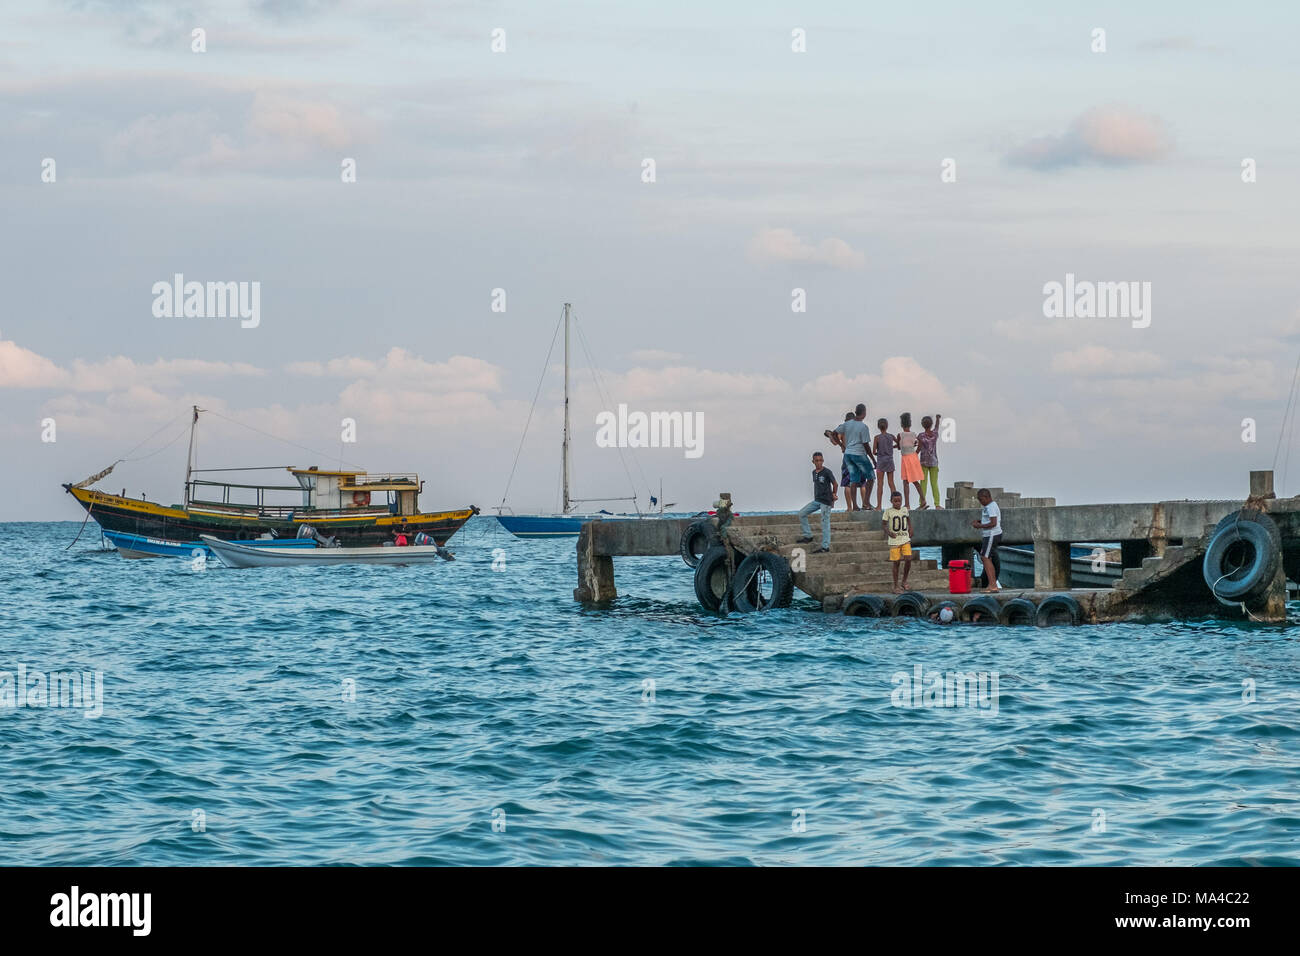 Capurgana, Kolumbien - Februar 2018: Boote und Menschen am Hafen von Capurgana, Kolumbien nahe der Grenze zu Panama. Stockfoto